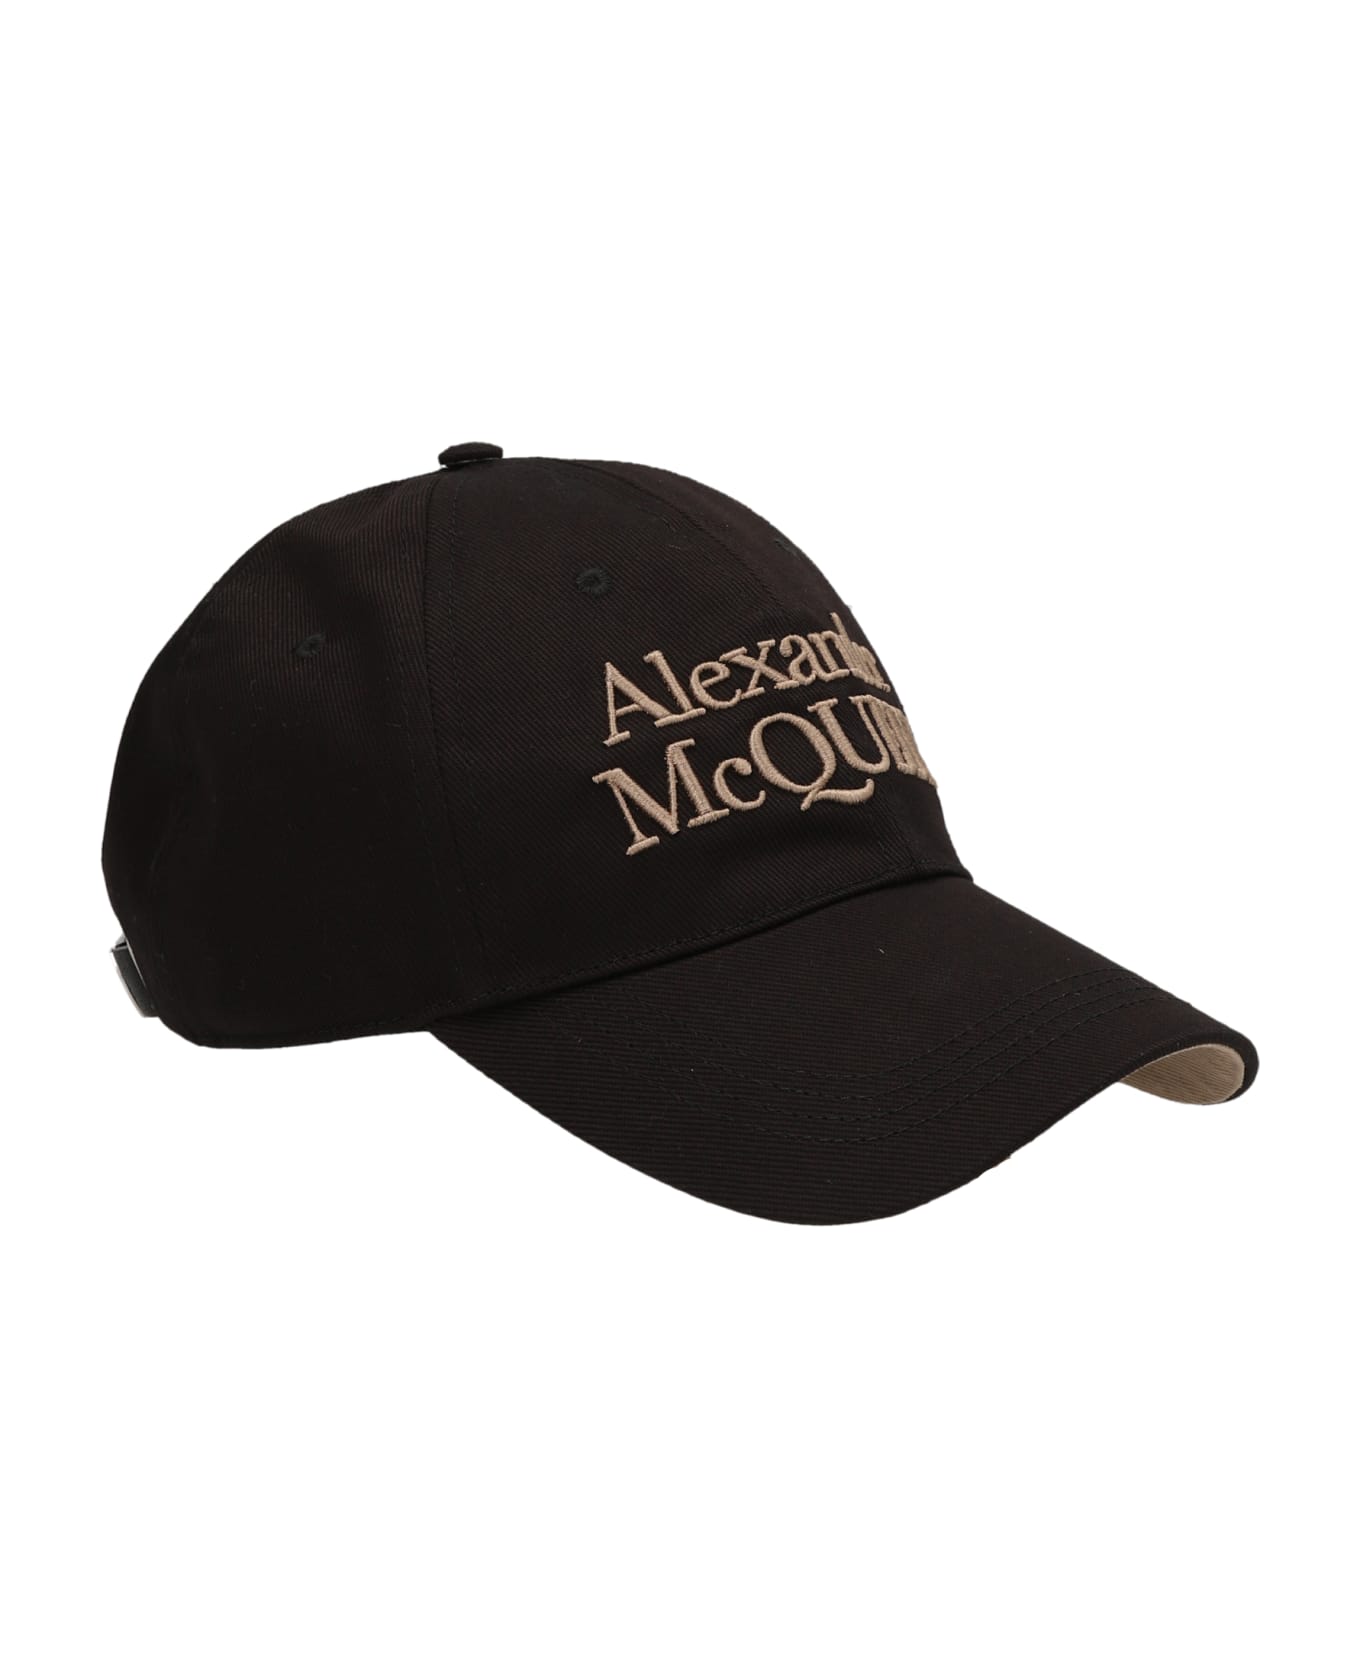 Alexander McQueen Logo Cap - Black  